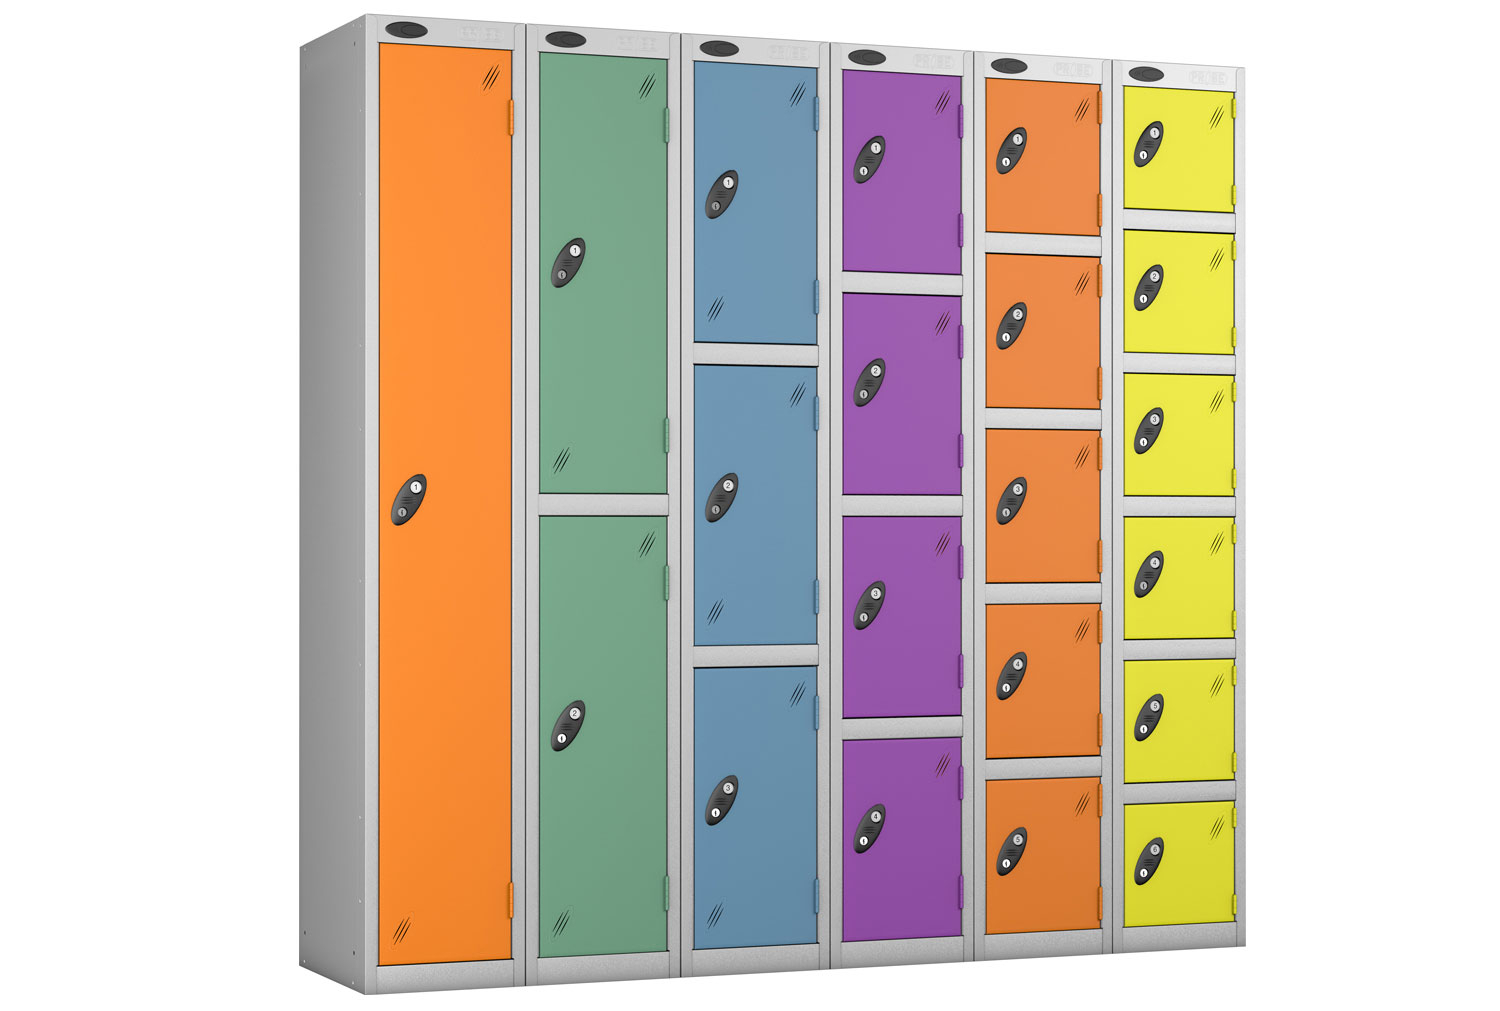 Probe Autumn Colour Lockers With Silver Body, 4 Door, 31wx46dx178h (cm), Hasp Lock, Silver Body, Jade